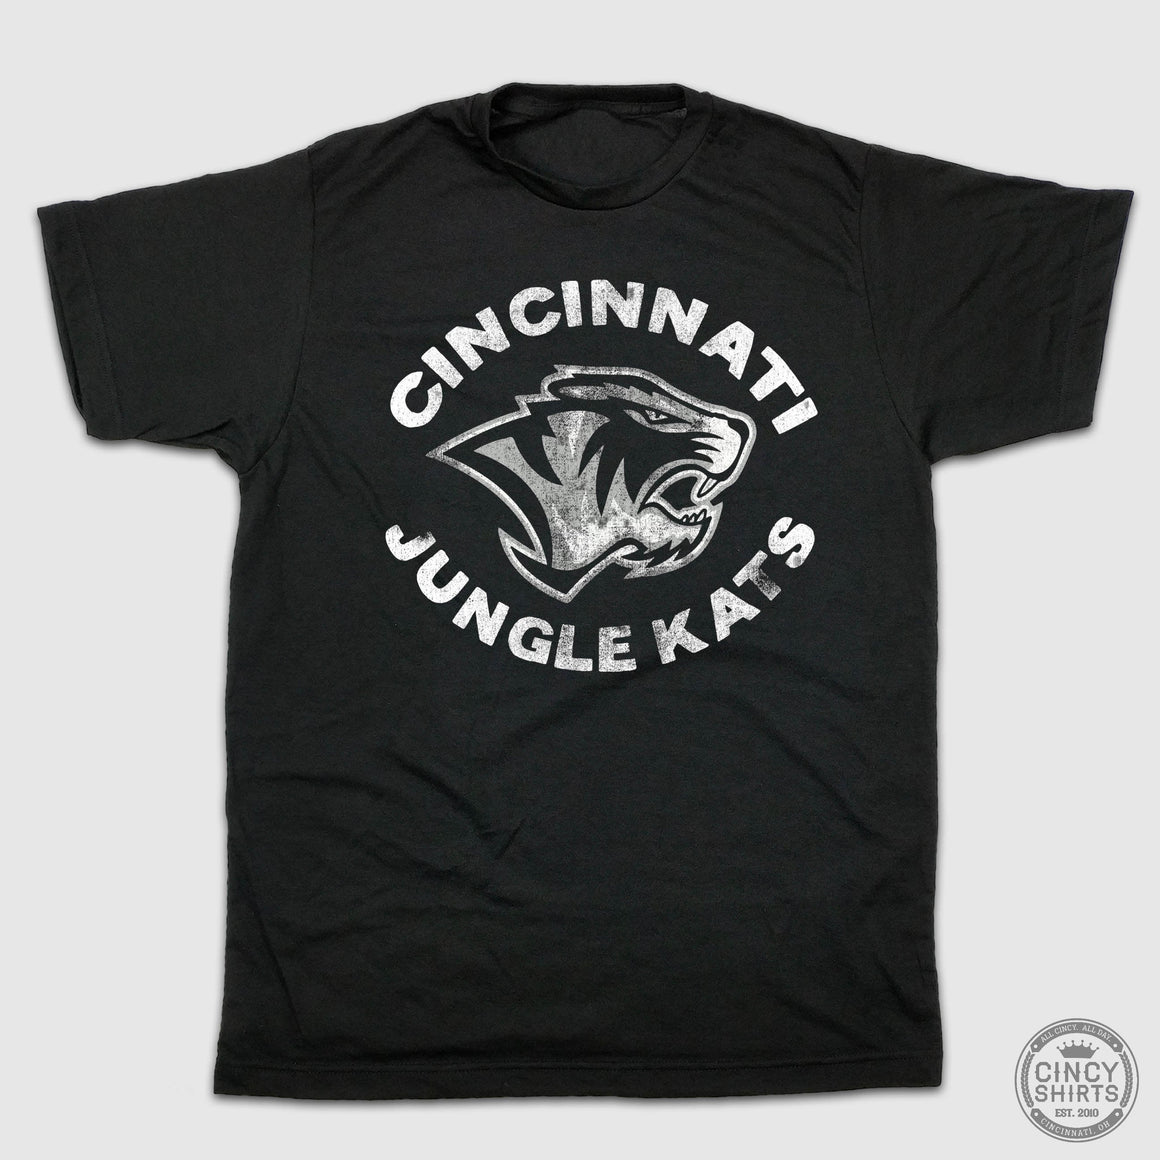 Cincinnati Jungle Kats - Cincy Shirts